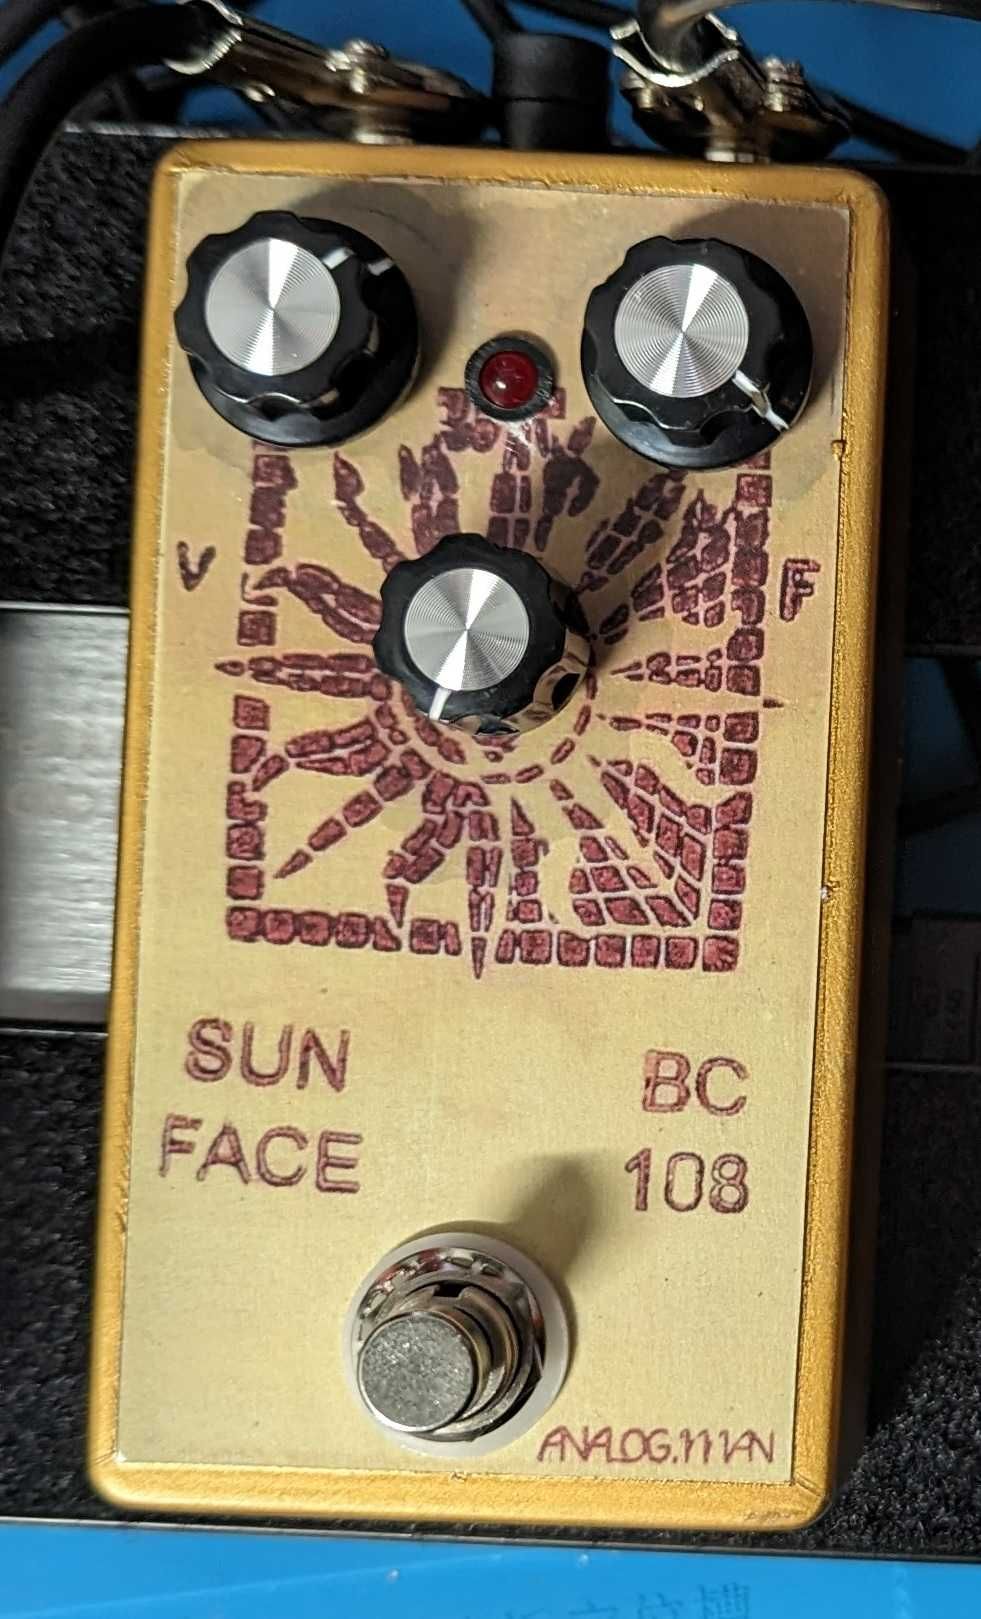 Analogman Sunface Fuzz BC108 - Clone